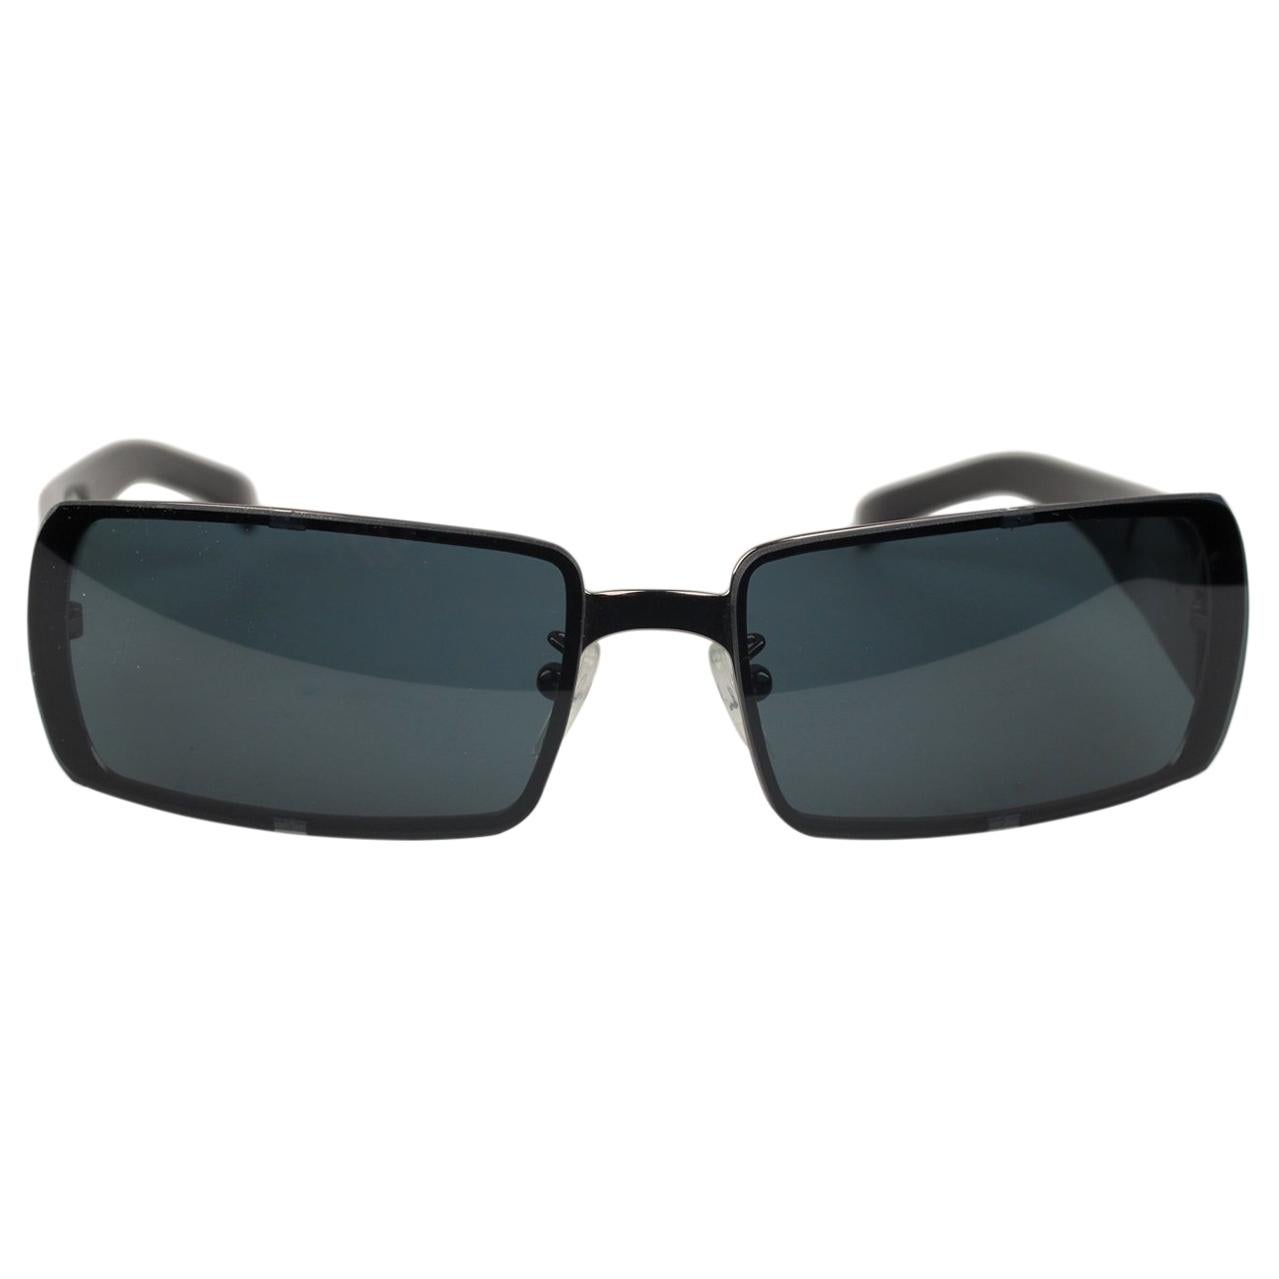 Fendi Unisex Sunglasses Mod. SL7460 Col. 568 62mm